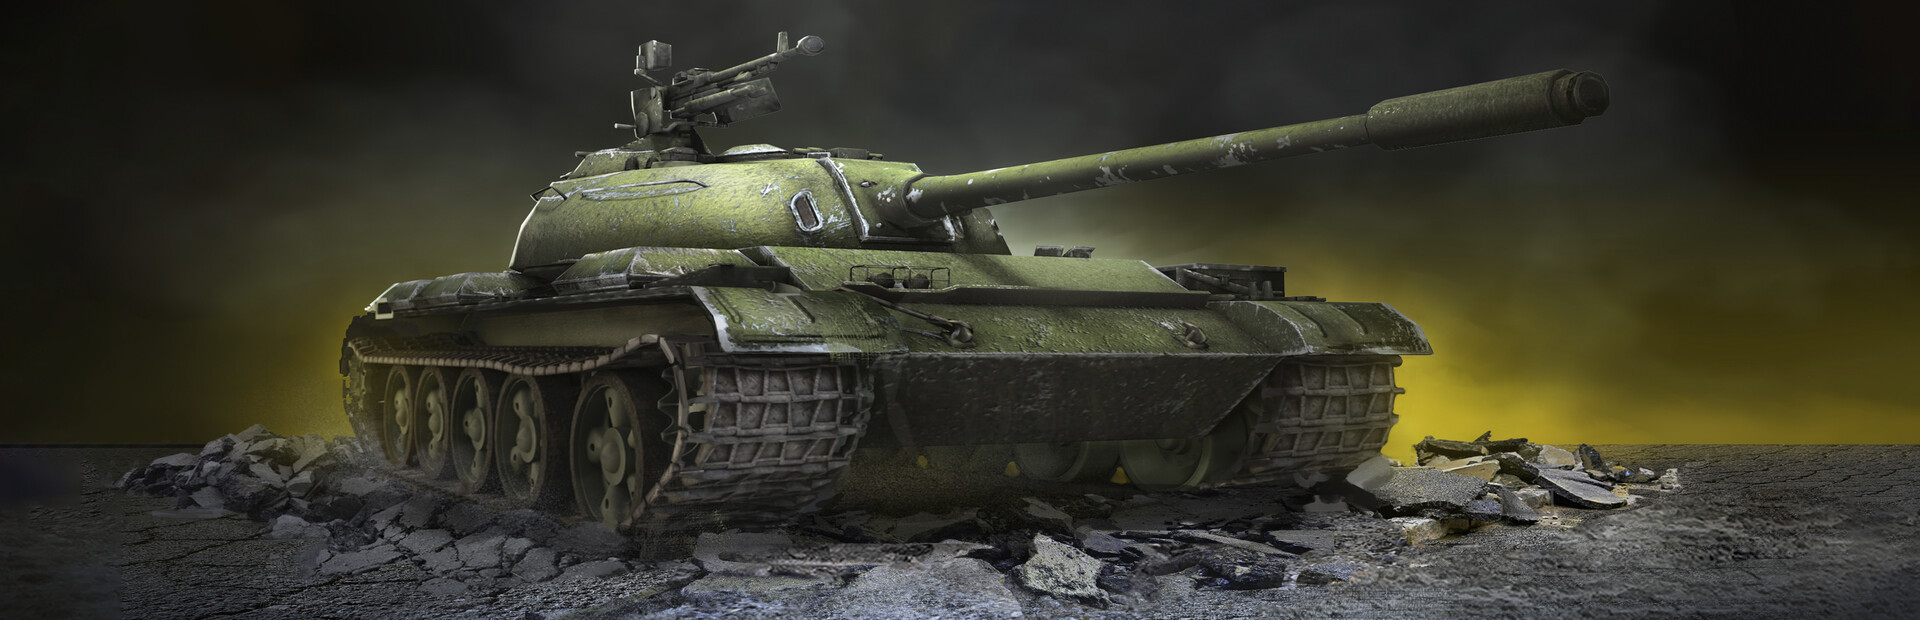 Grand Tanks: WW2 Tank Games cover image